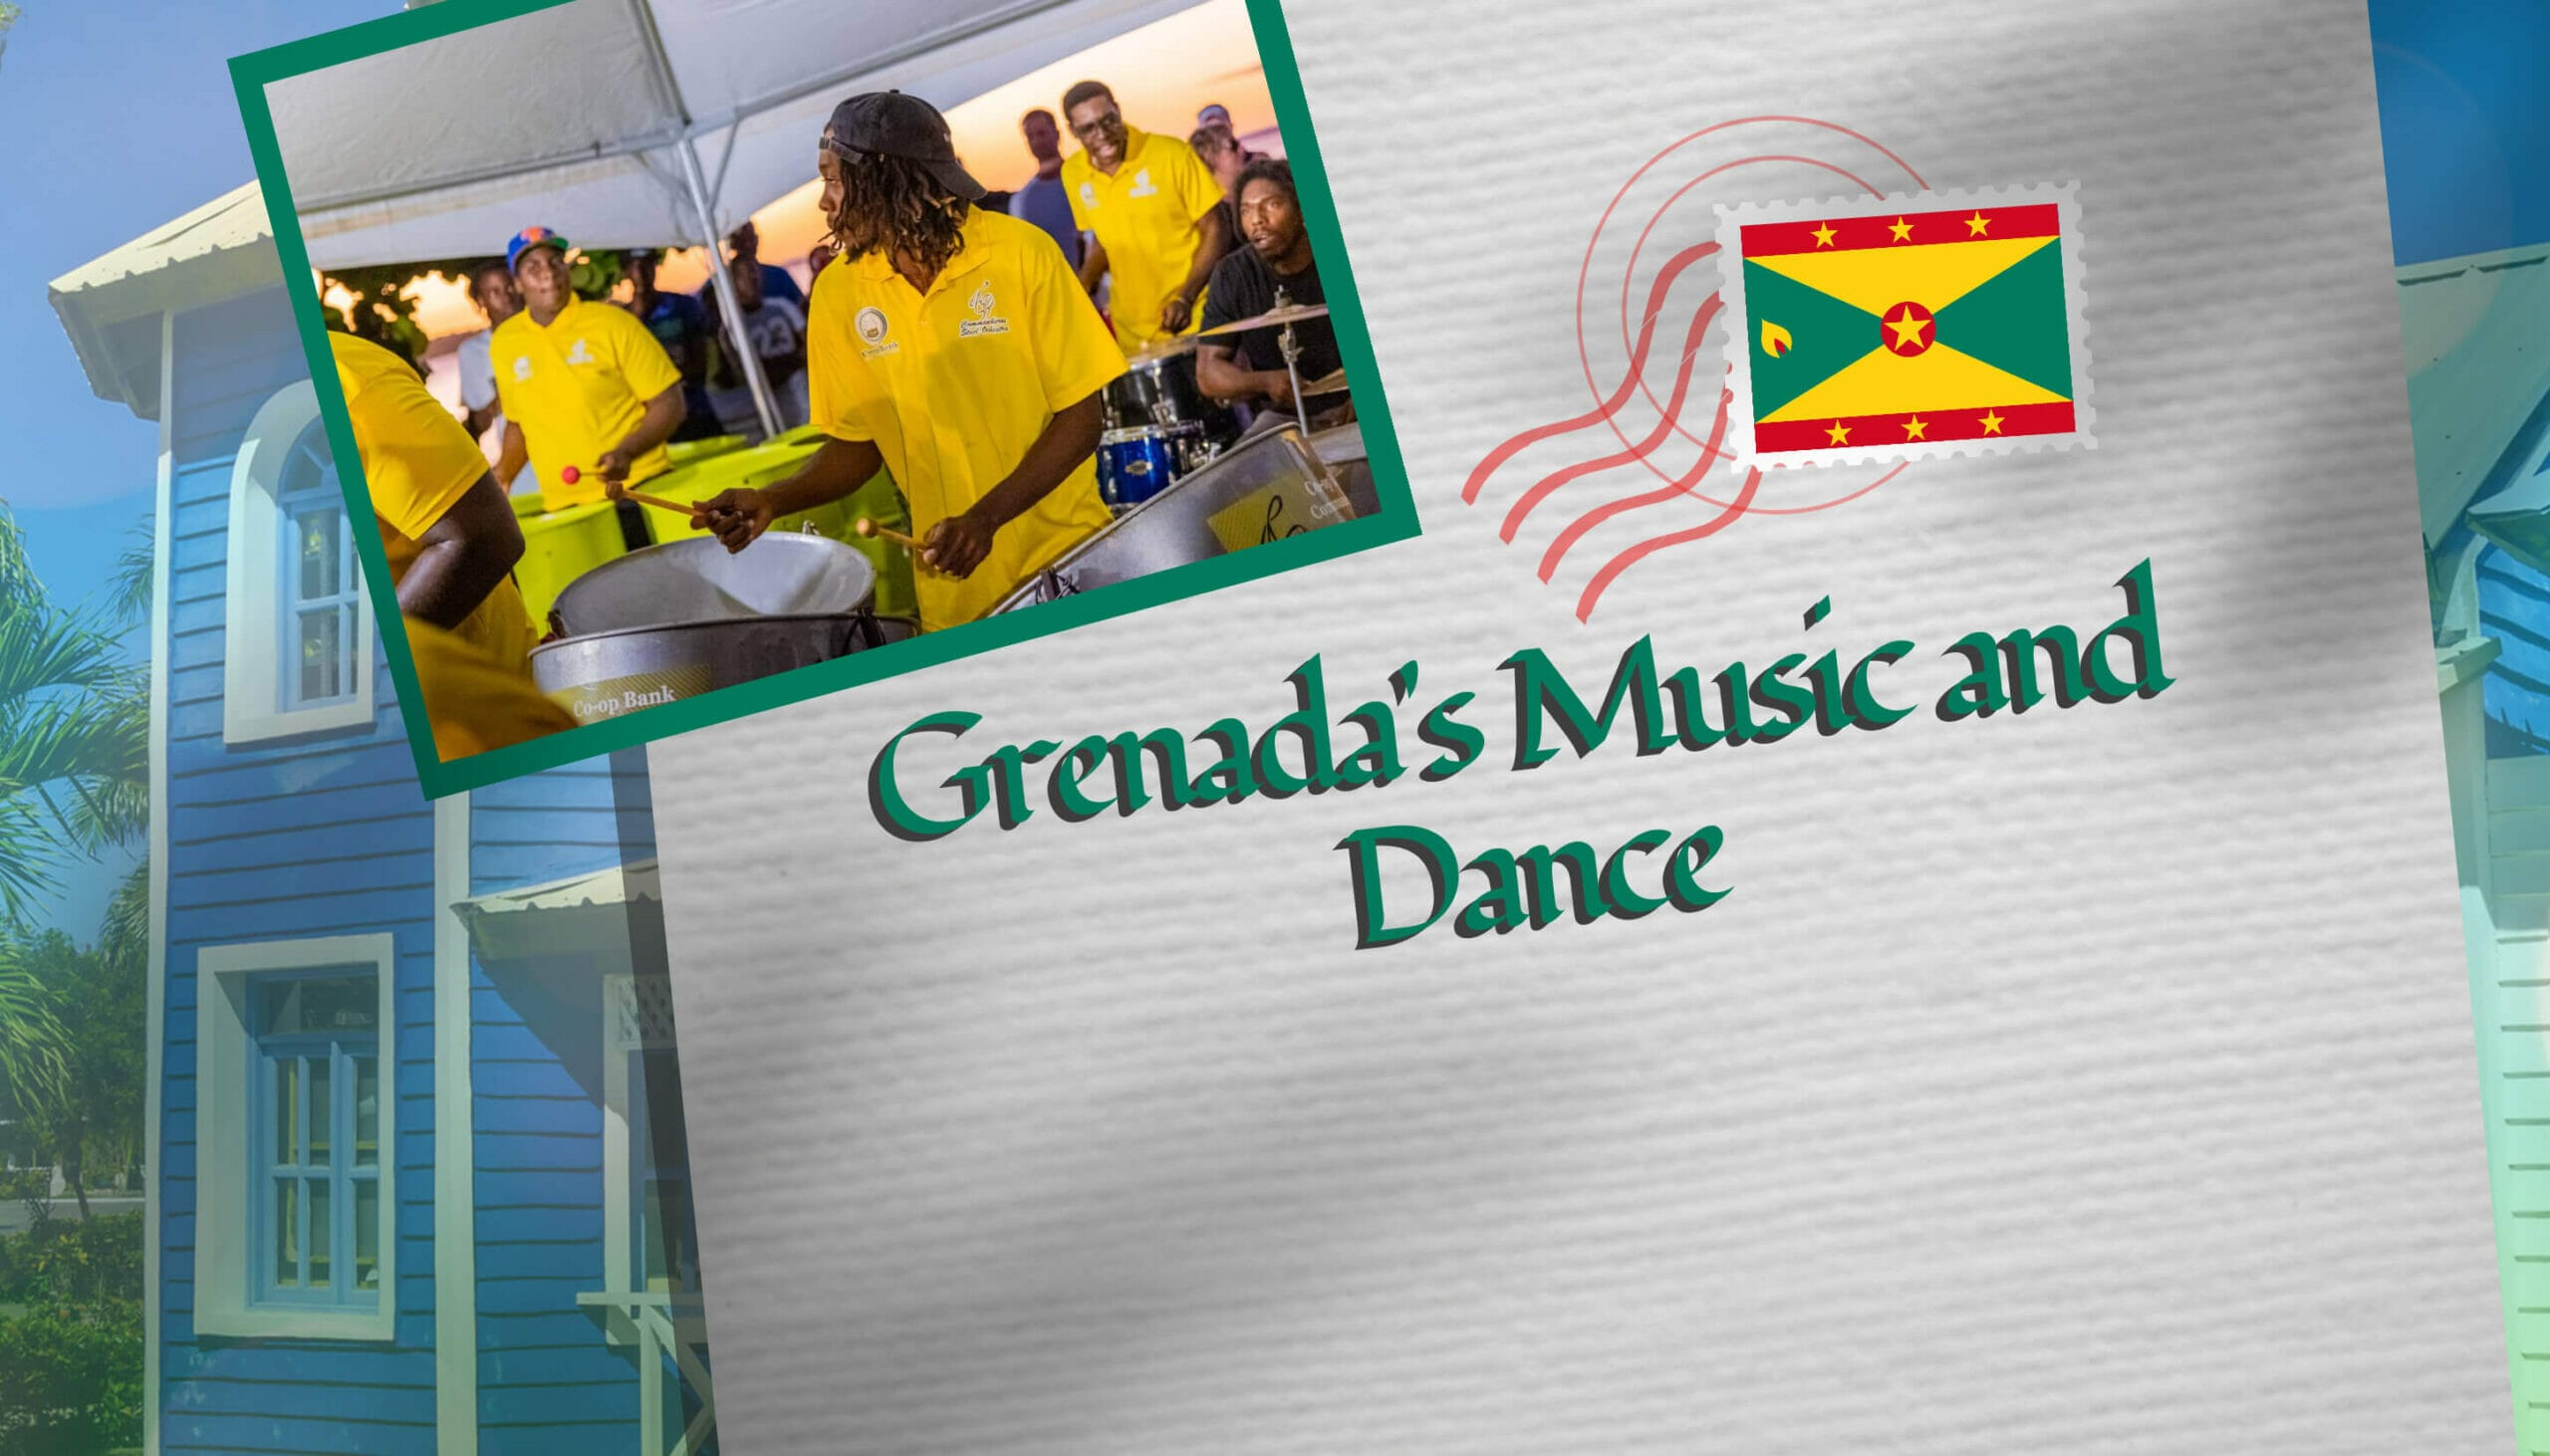 Grenada's Music and Dance